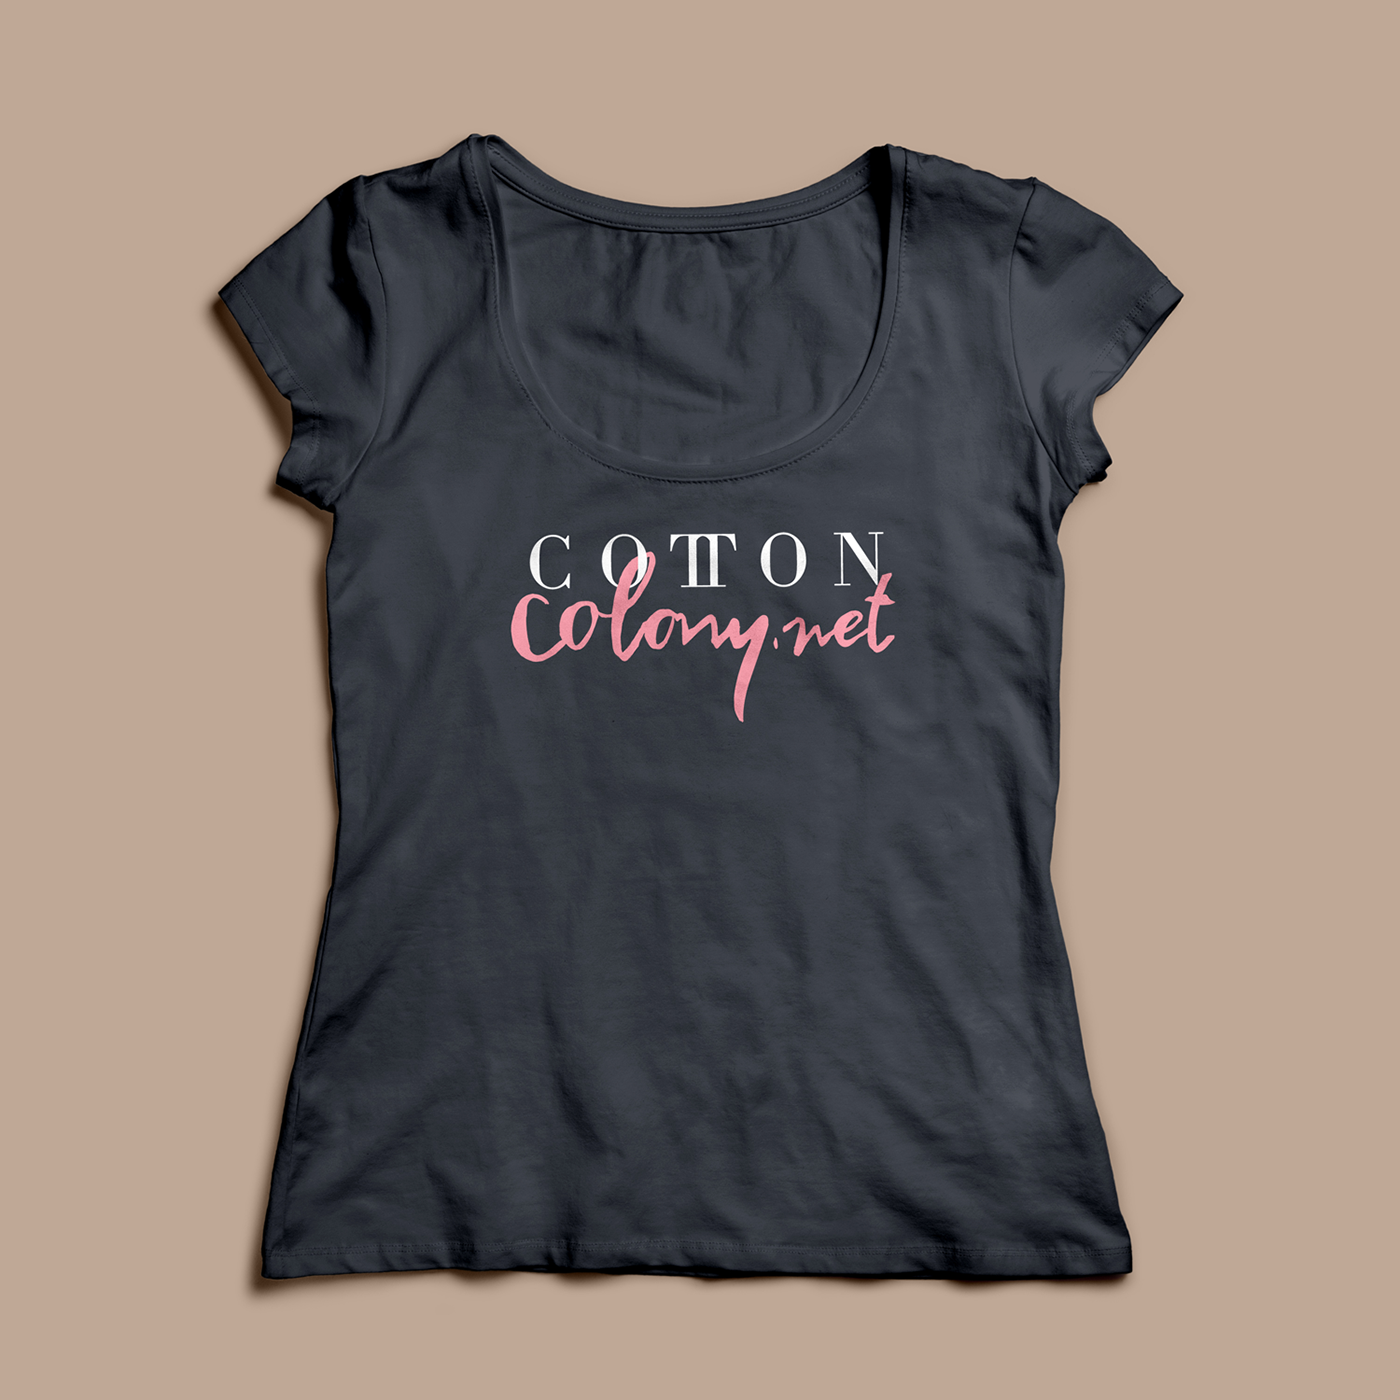 Urban Fashion  urban woman algodon cotton woman´s wear